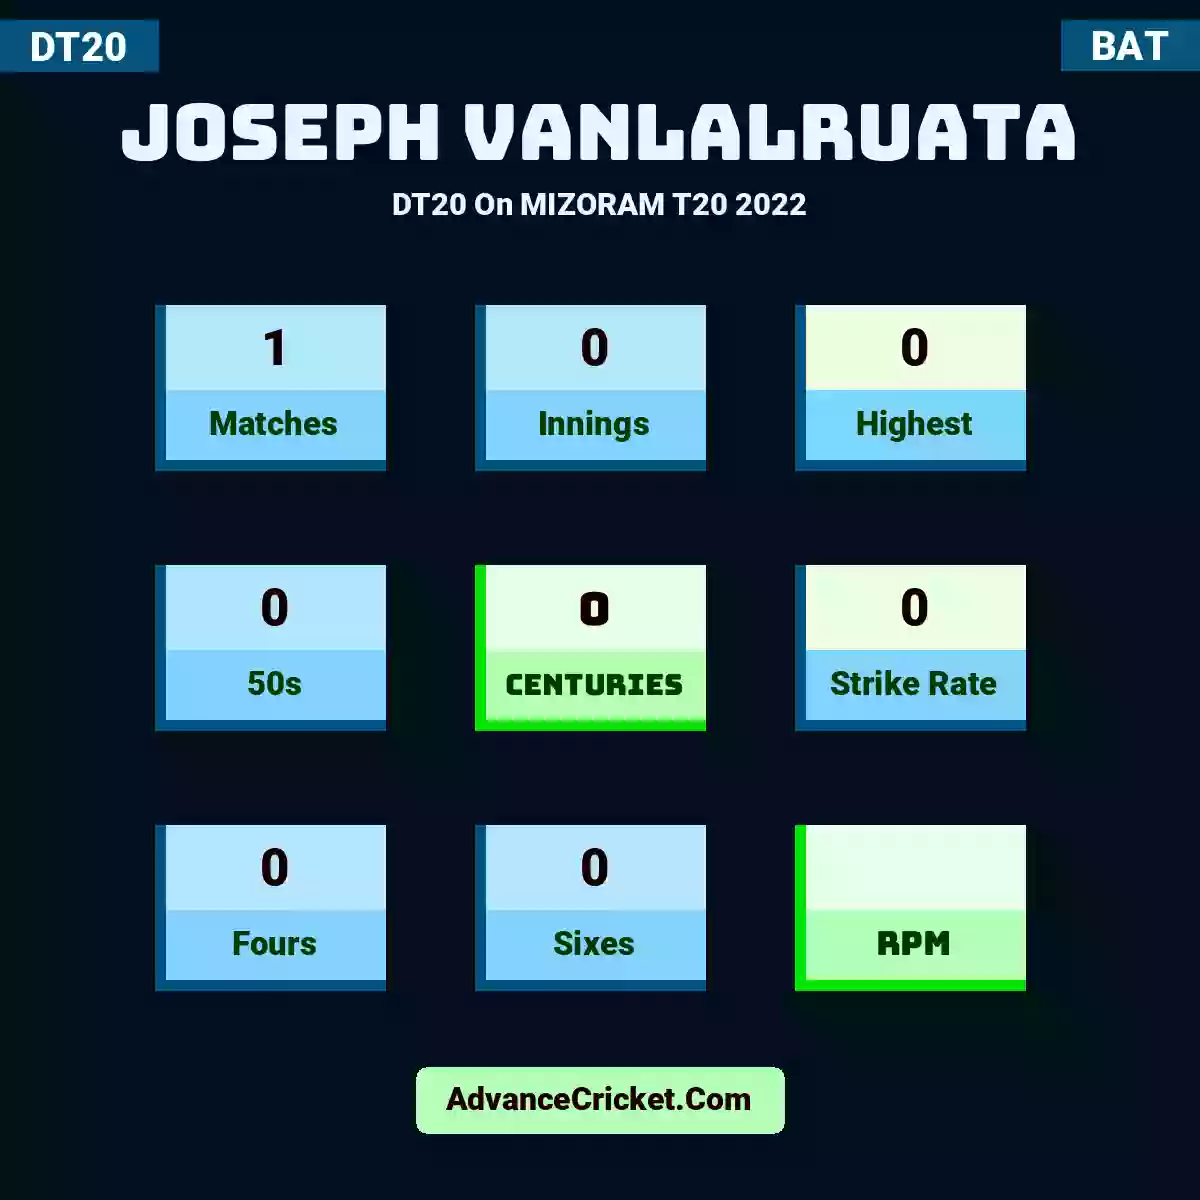 Joseph Vanlalruata DT20  On MIZORAM T20 2022, Joseph Vanlalruata played 1 matches, scored 0 runs as highest, 0 half-centuries, and 0 centuries, with a strike rate of 0. J.Vanlalruata hit 0 fours and 0 sixes.